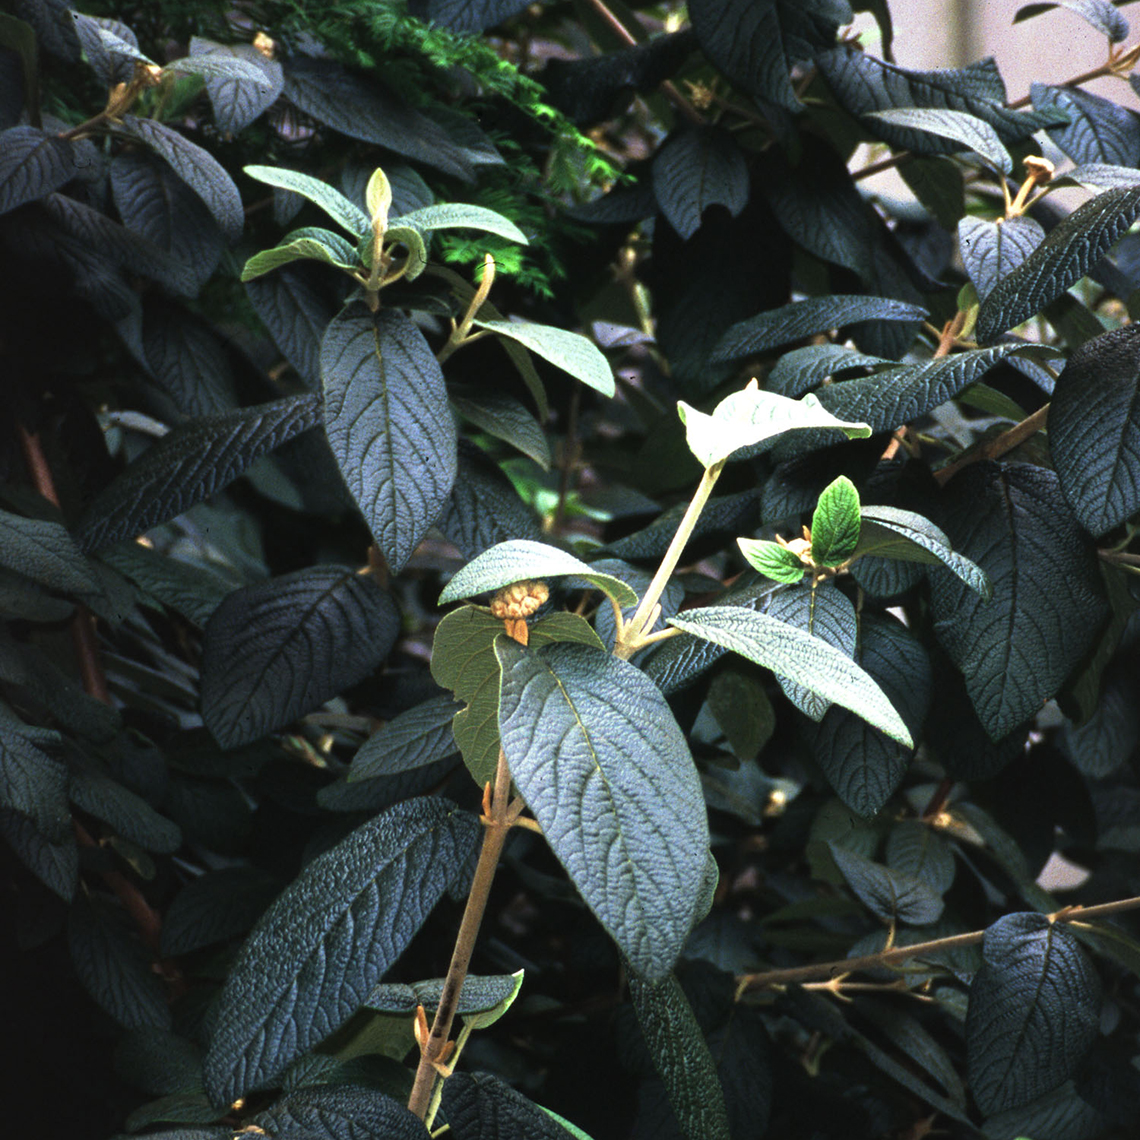 The very dark green textured foliage of Allgheny viburnum